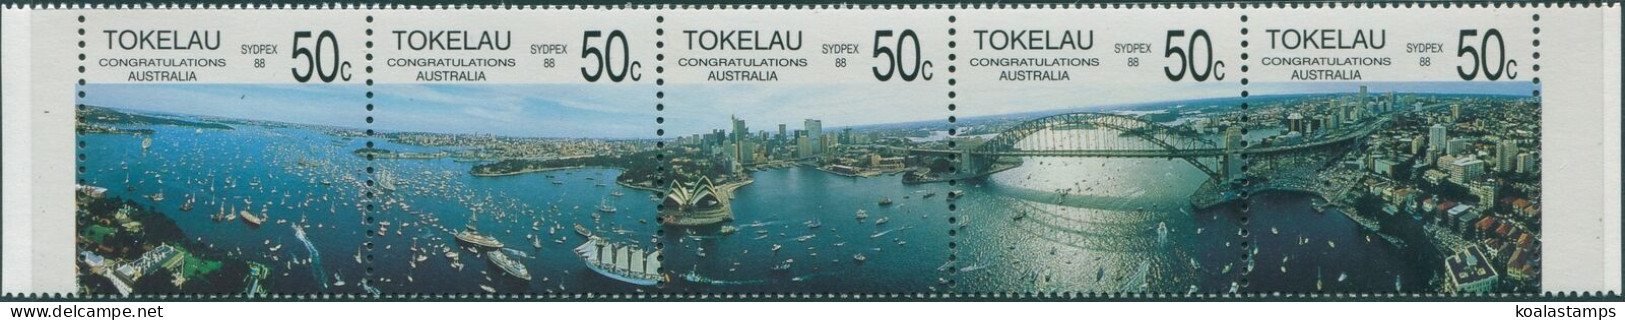 Tokelau 1988 SG154-158 Aust Bi-centenary Sydpex Set MNH - Tokelau